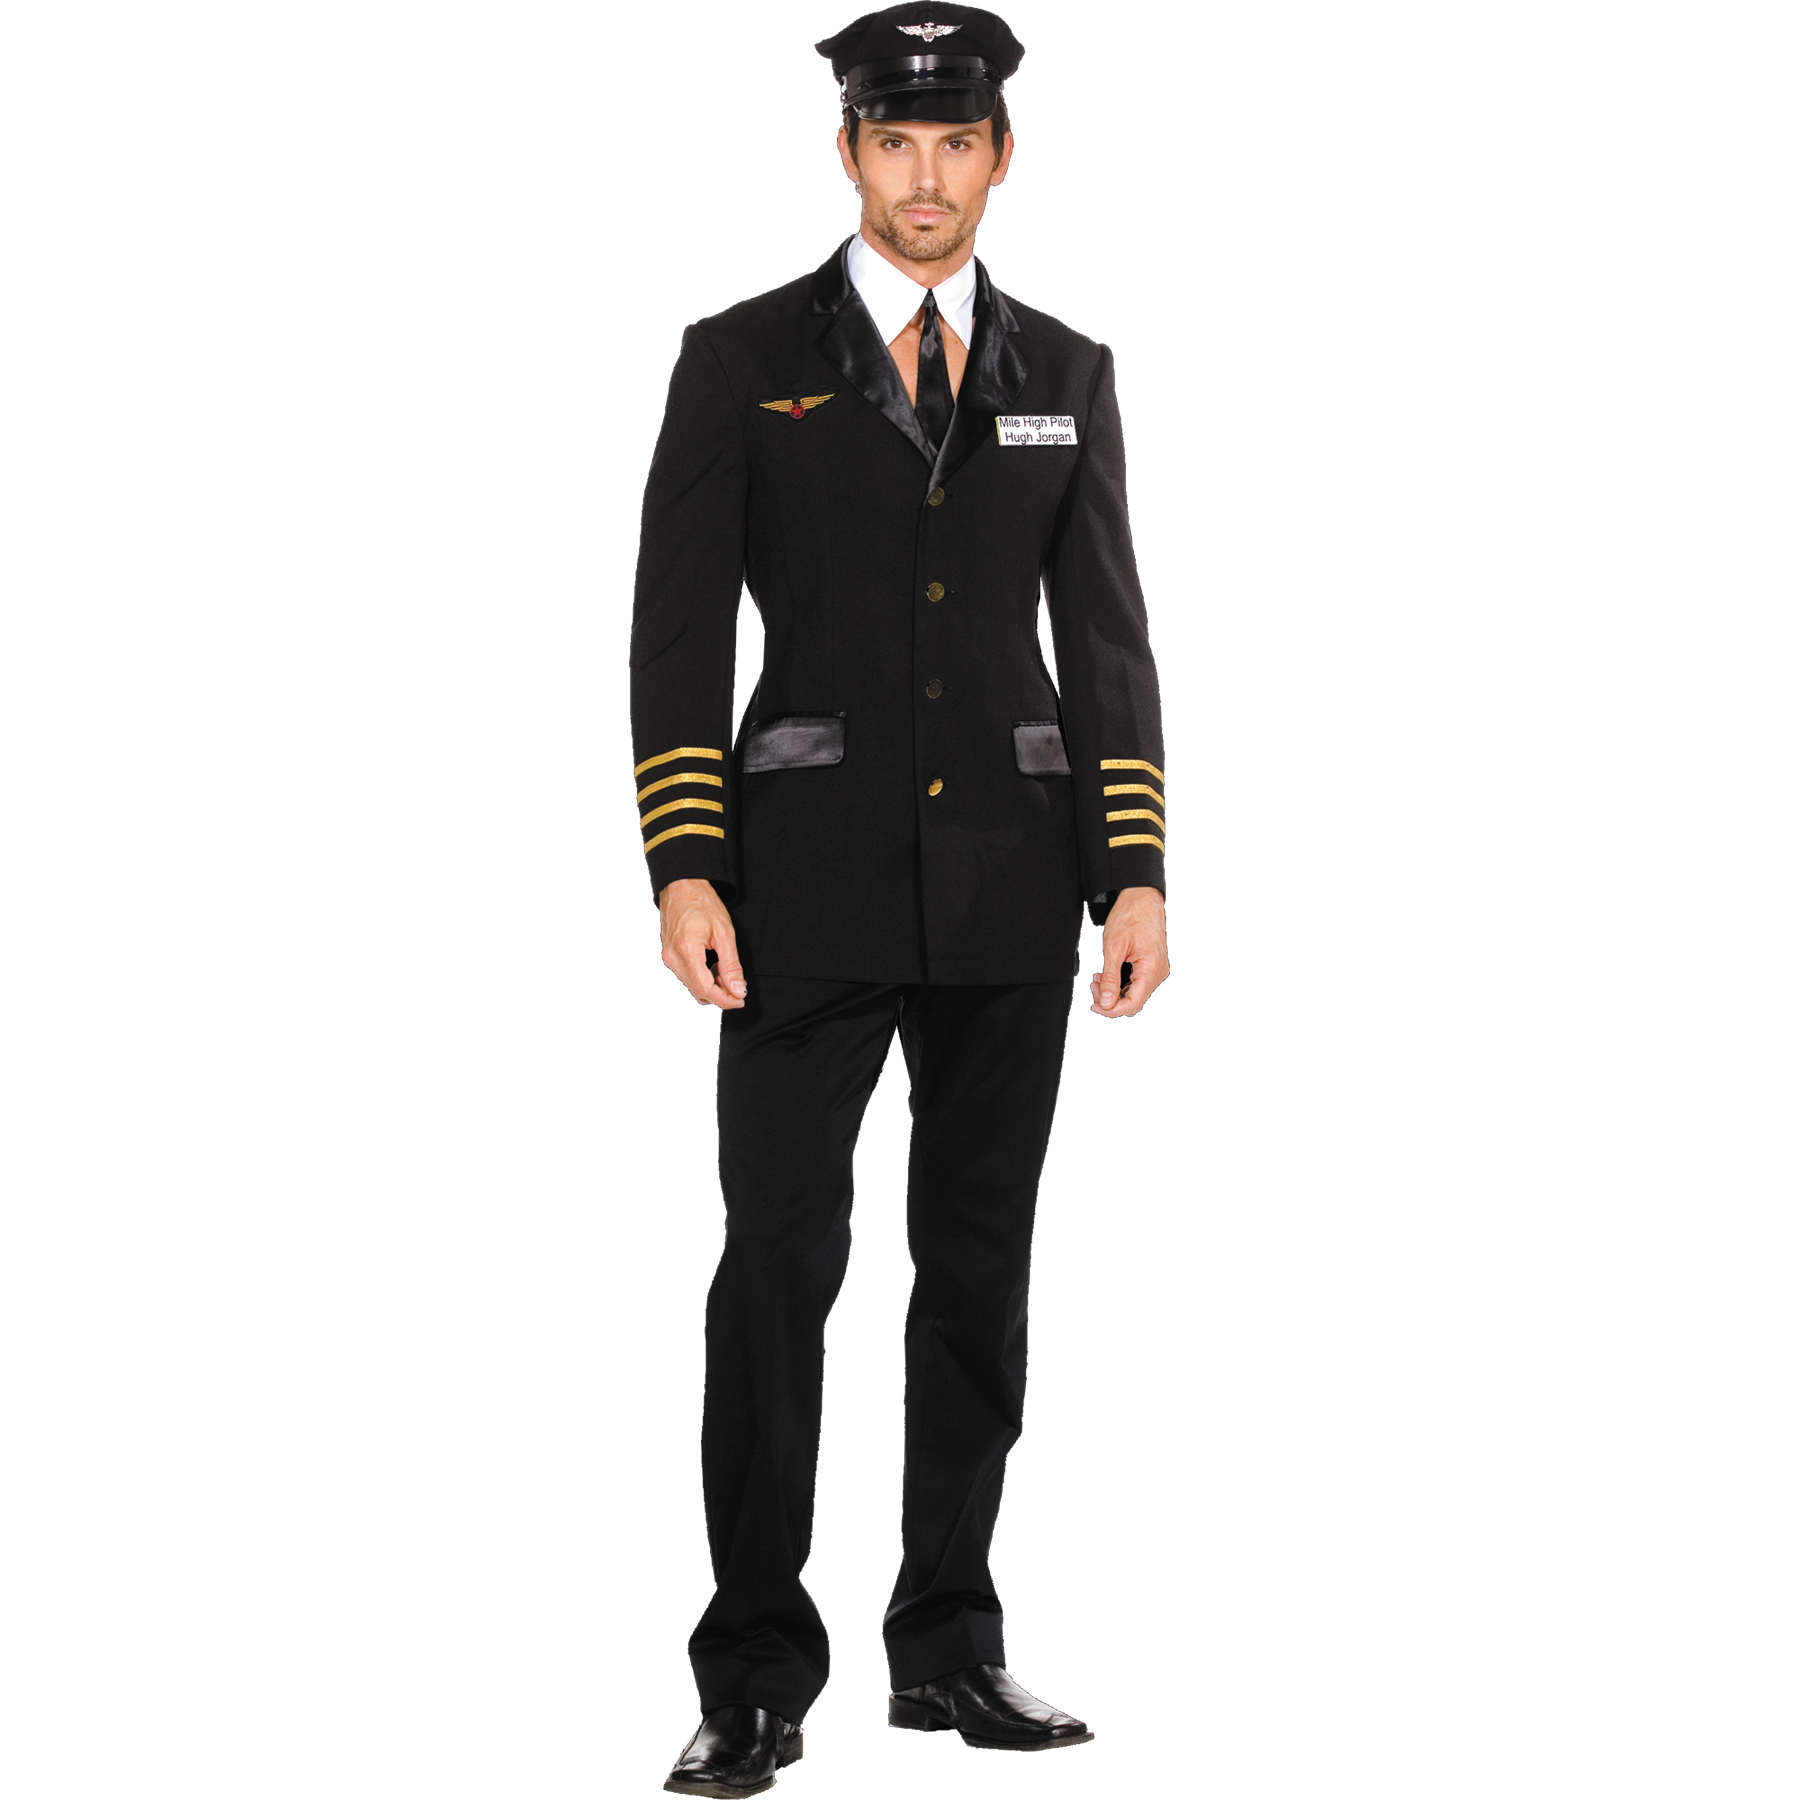 Men's Pilot Hugh Jorgan Costume